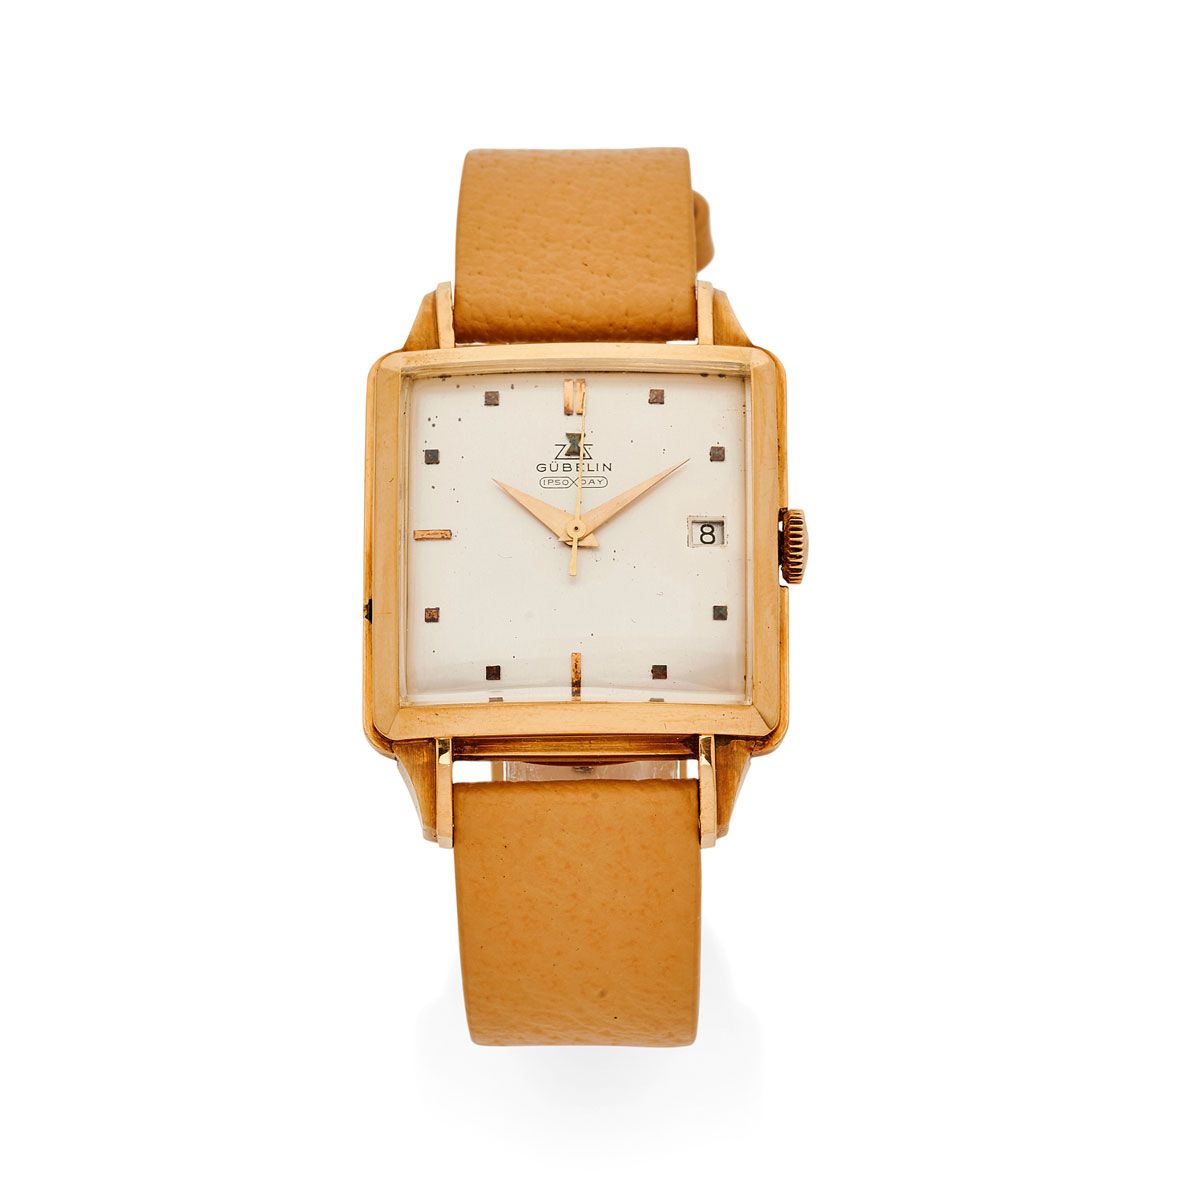 Null Gübelin, Ipso-Day, No. 149807, circa 1960.

A beautiful gold watch, stylize&hellip;